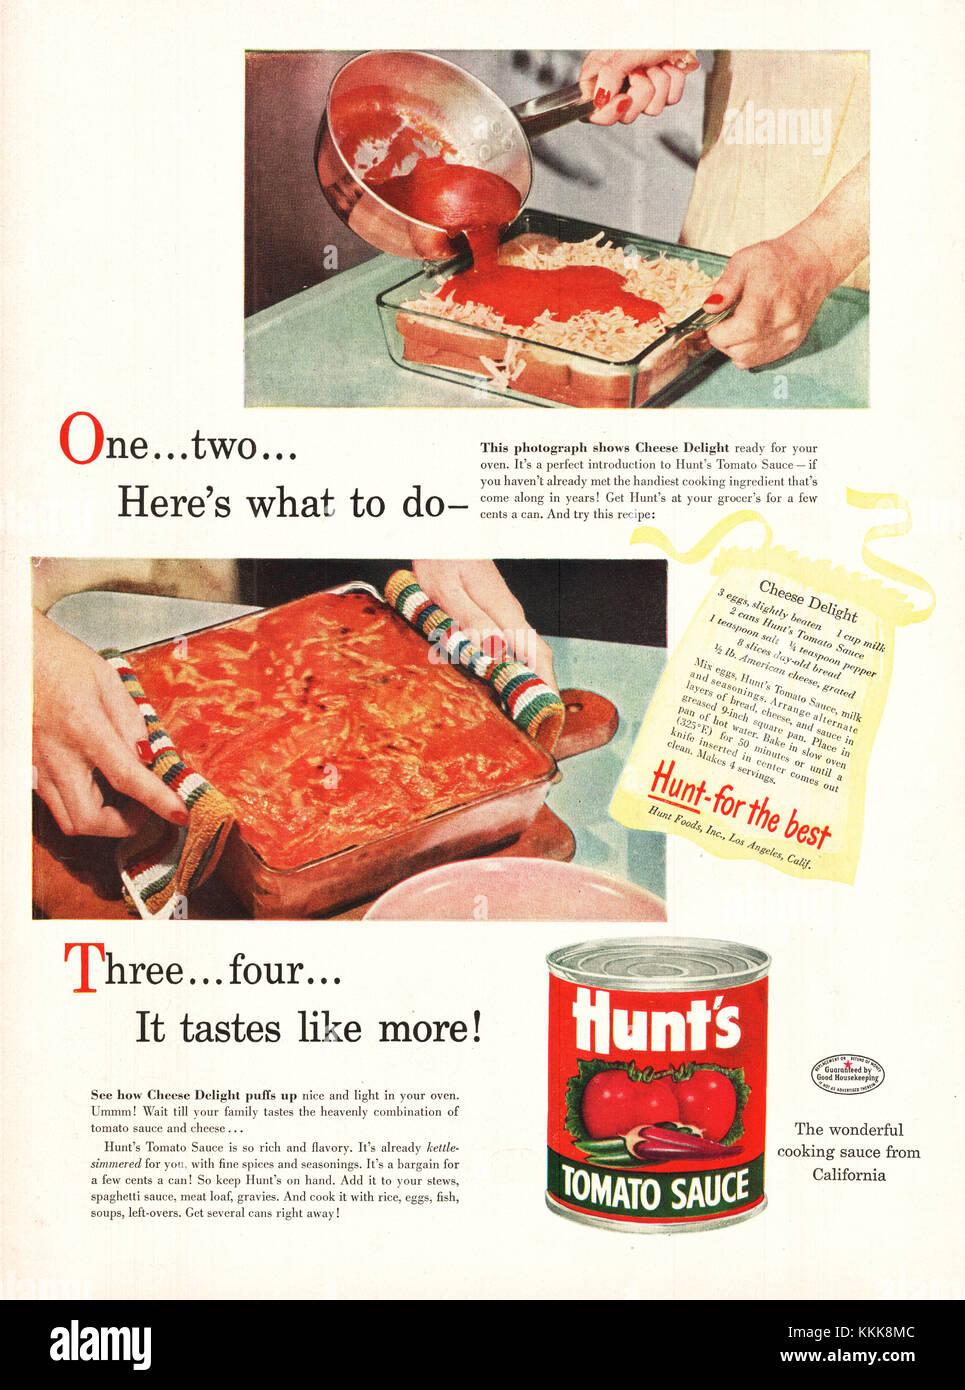 1948 U.S. Magazine Hunt's Tomato Sauce Advert Stock Photo